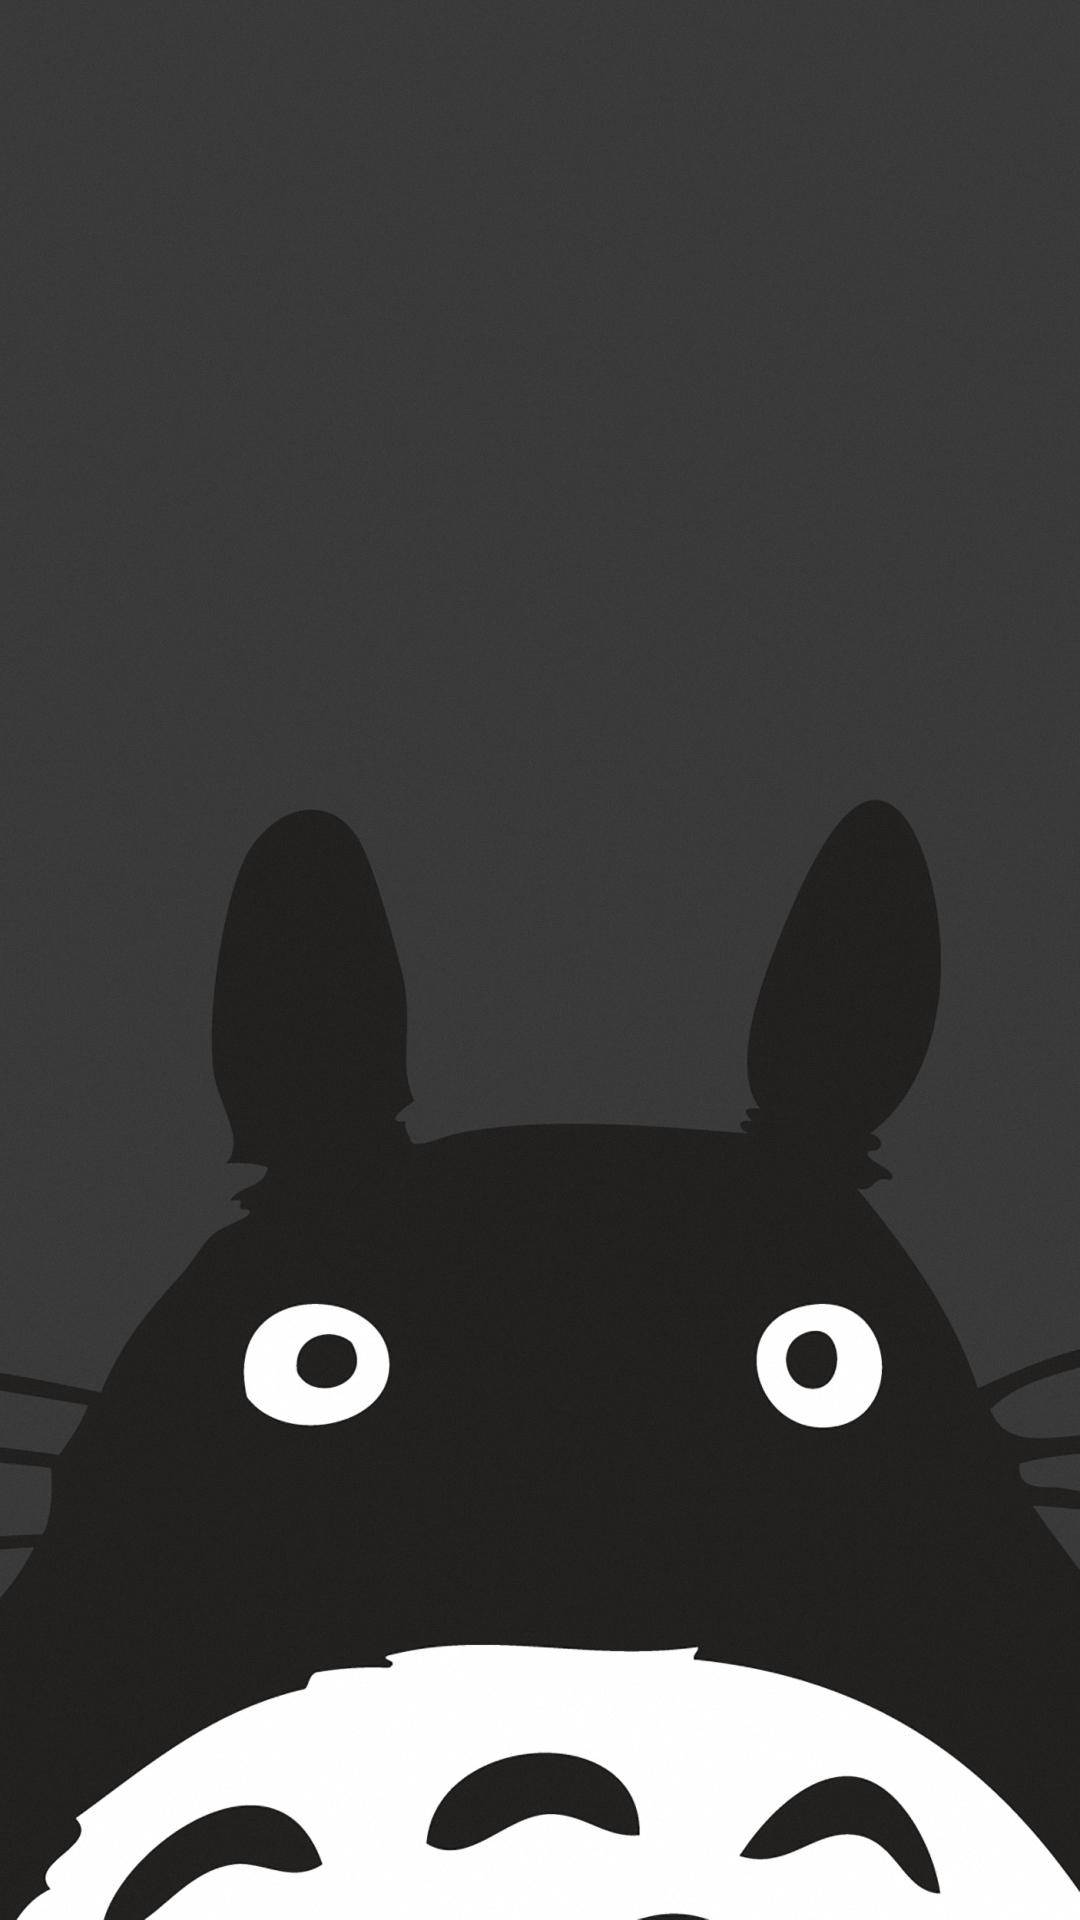 Download 1080p Hd Totoro My Neighbor Totoro Wallpaper | Wallpapers.com